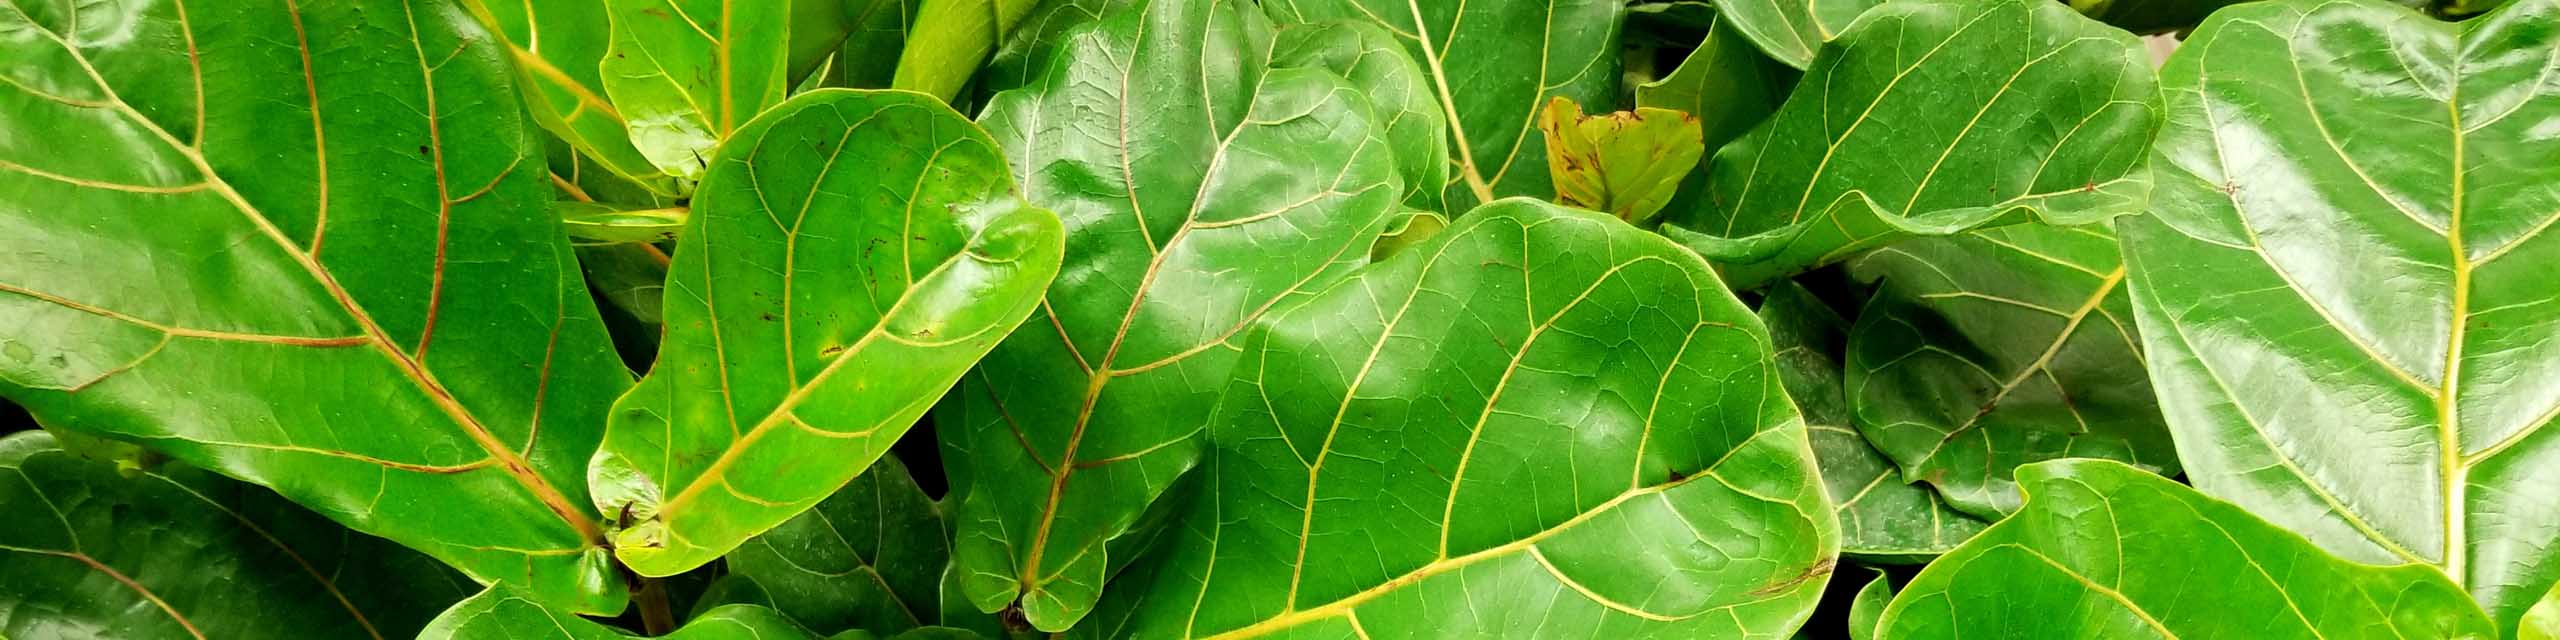 Close up of green fiddle-leaf fig plants.